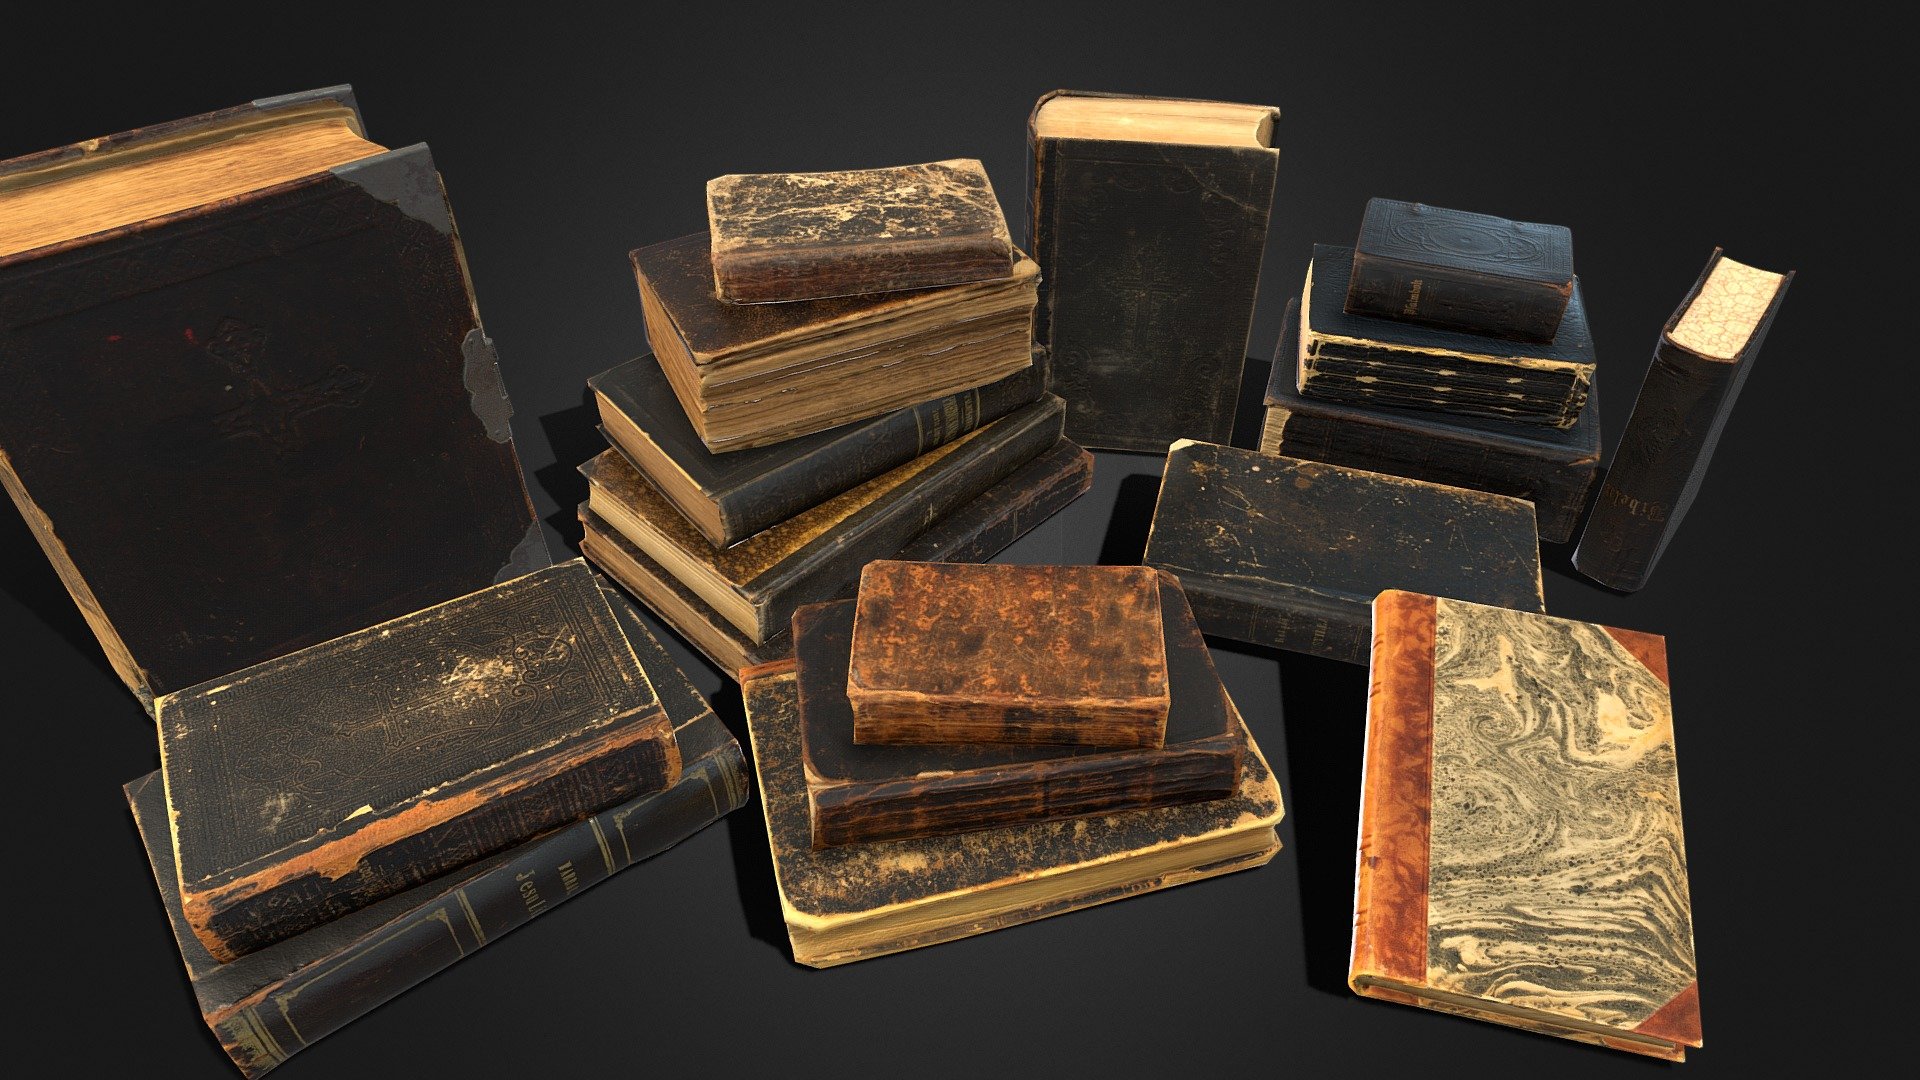 A set of 18 photoscanned books - Old Damaged Books set - PBR Game ready - 3D model by Svardz 3d model